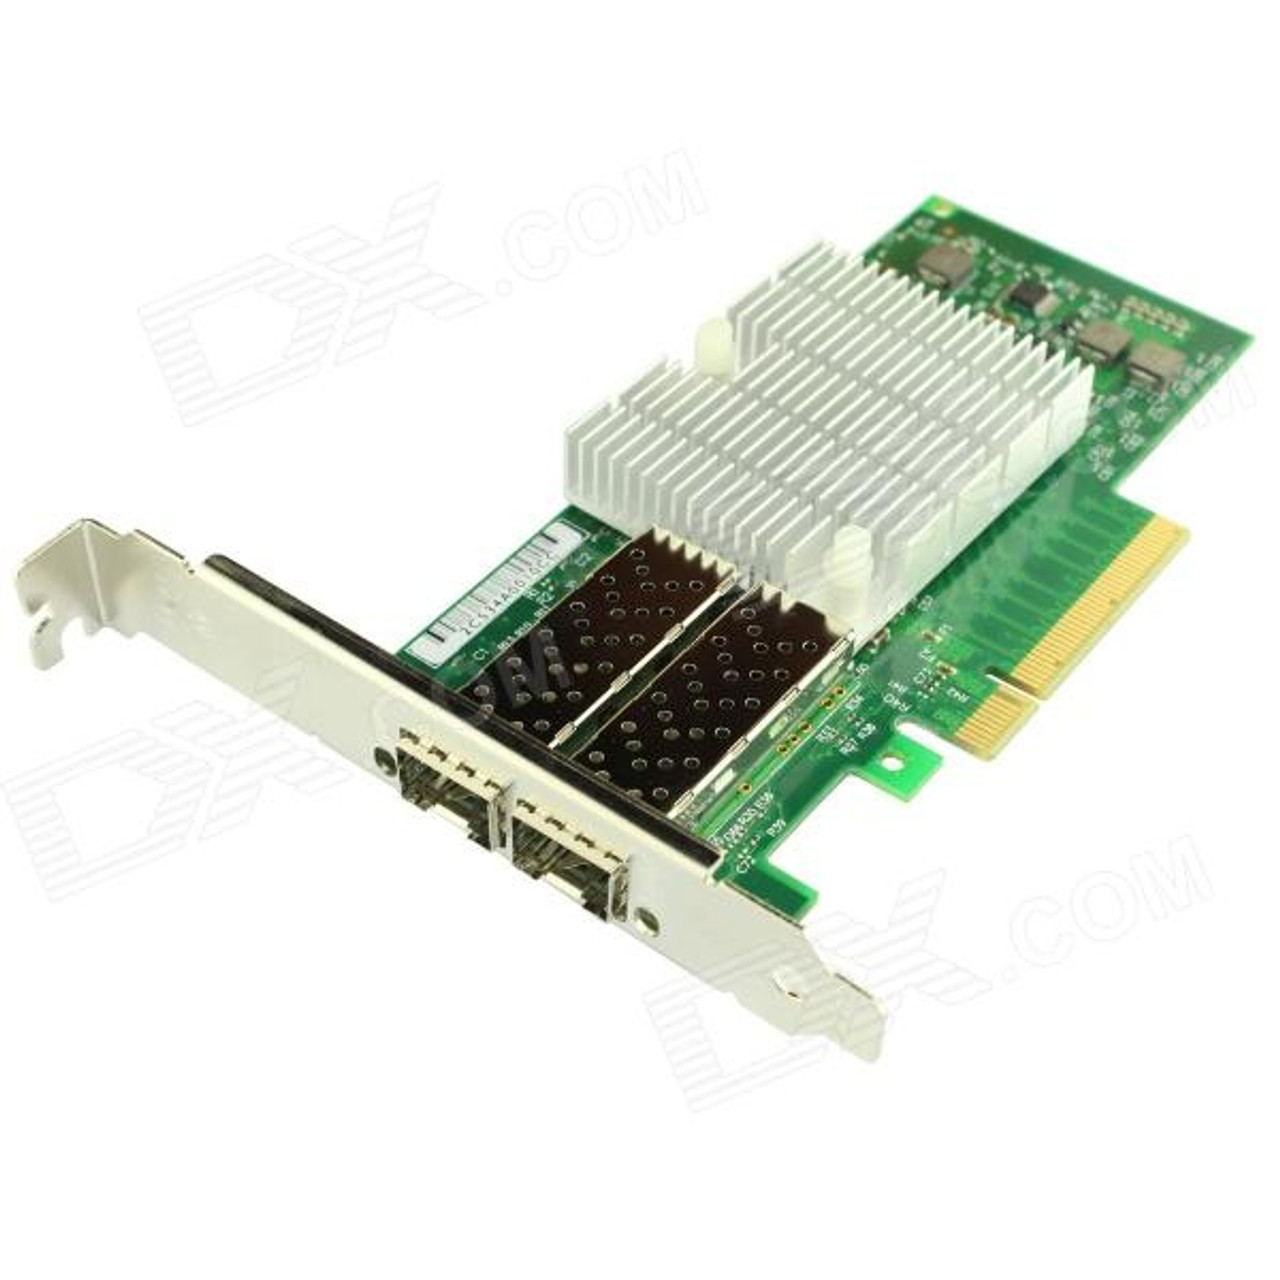 718203-B21 - HP Lpe1605 16GB Dual Port PCI-Express Fibre Channel Mezzanine Host Bus Adapter